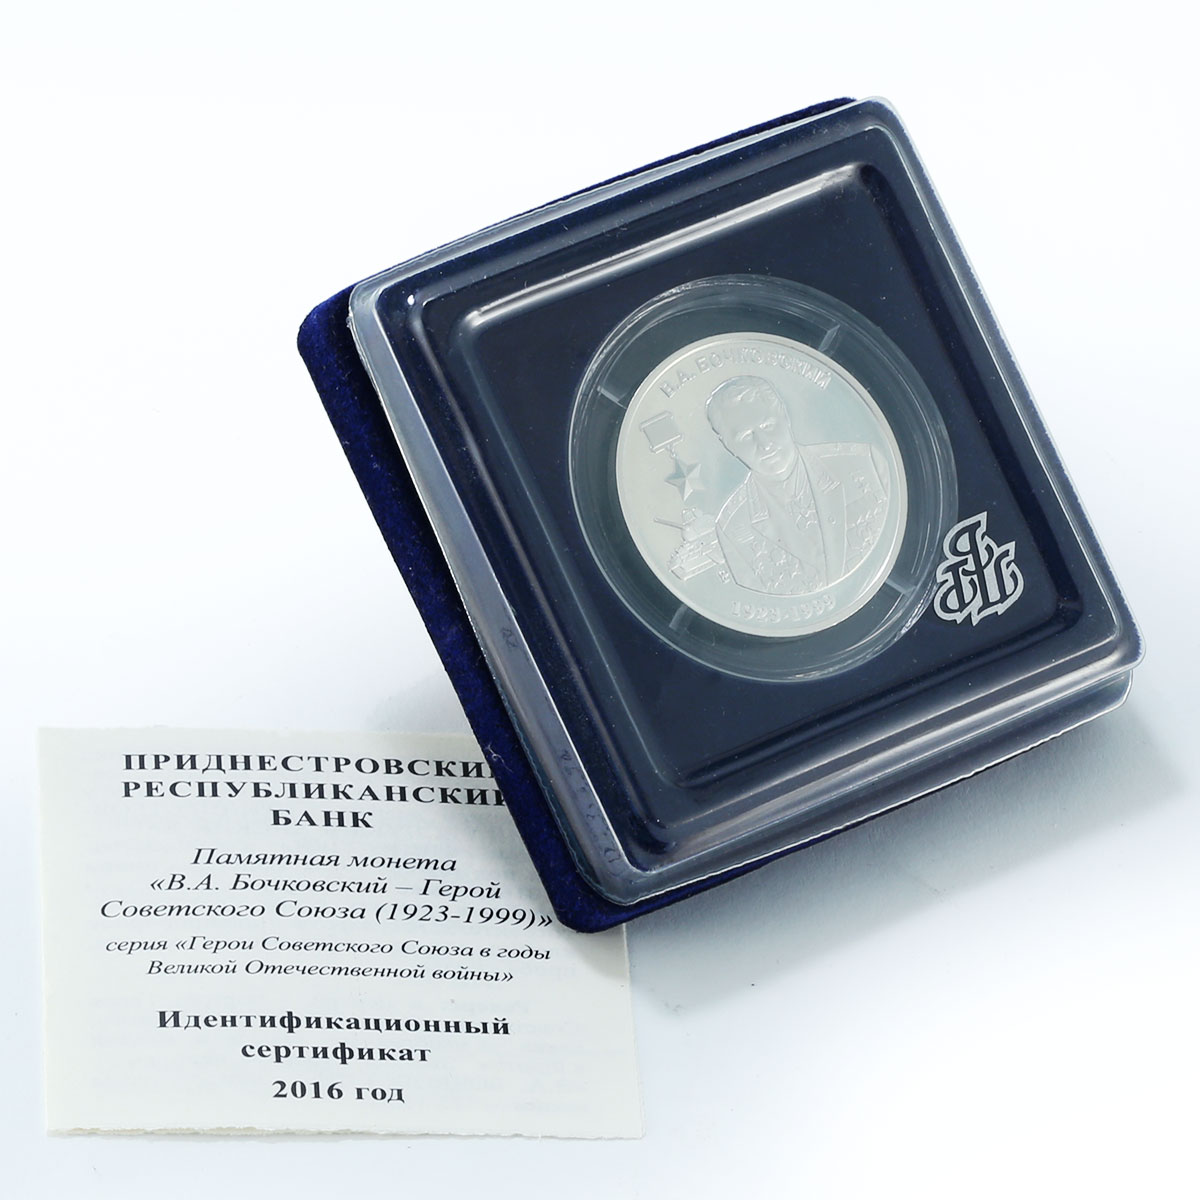 Transnistria 10 rubles Soviet Union Vladimir Bochkovskiy proof silver coin 2016